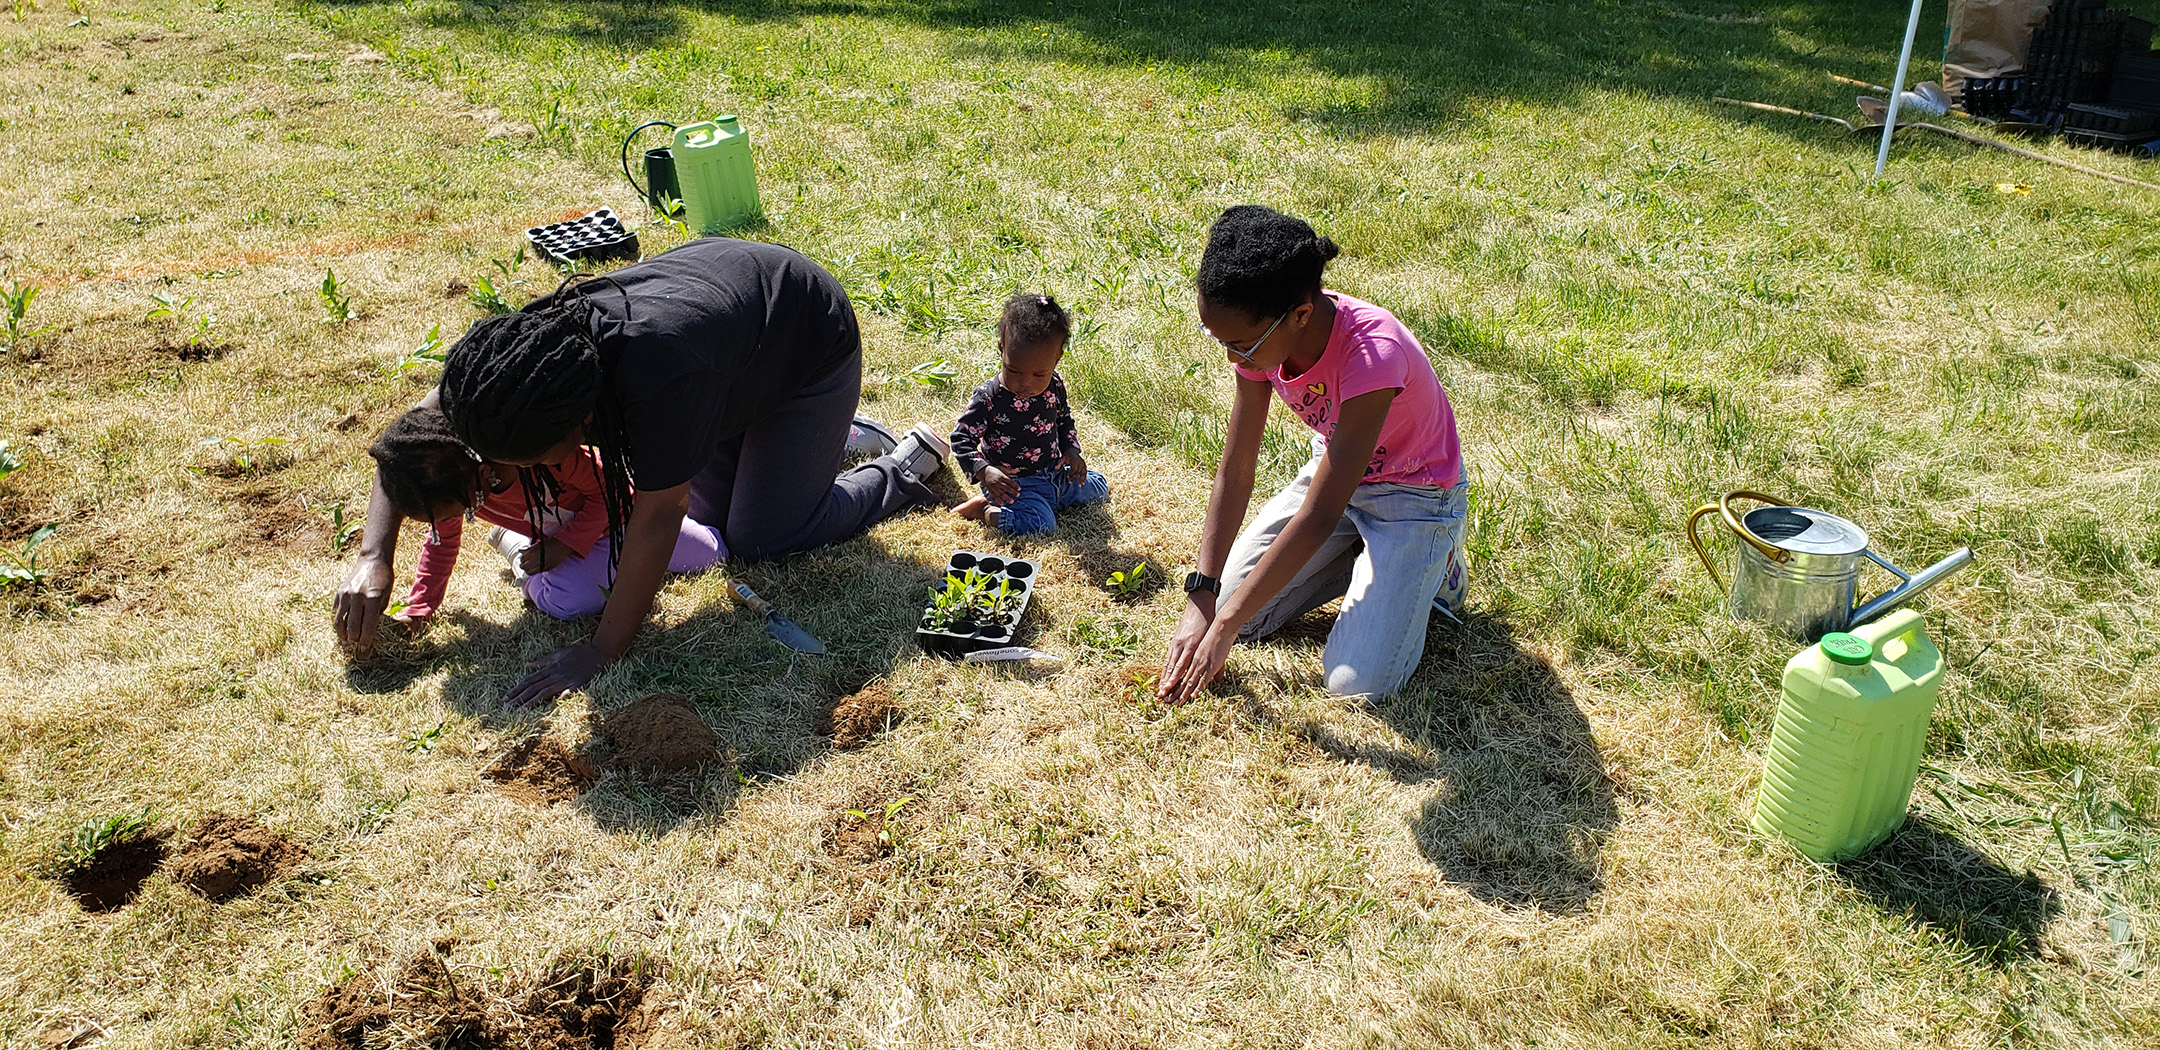 A woman and three children plant flowers to convert barren grass into pollinator habitat